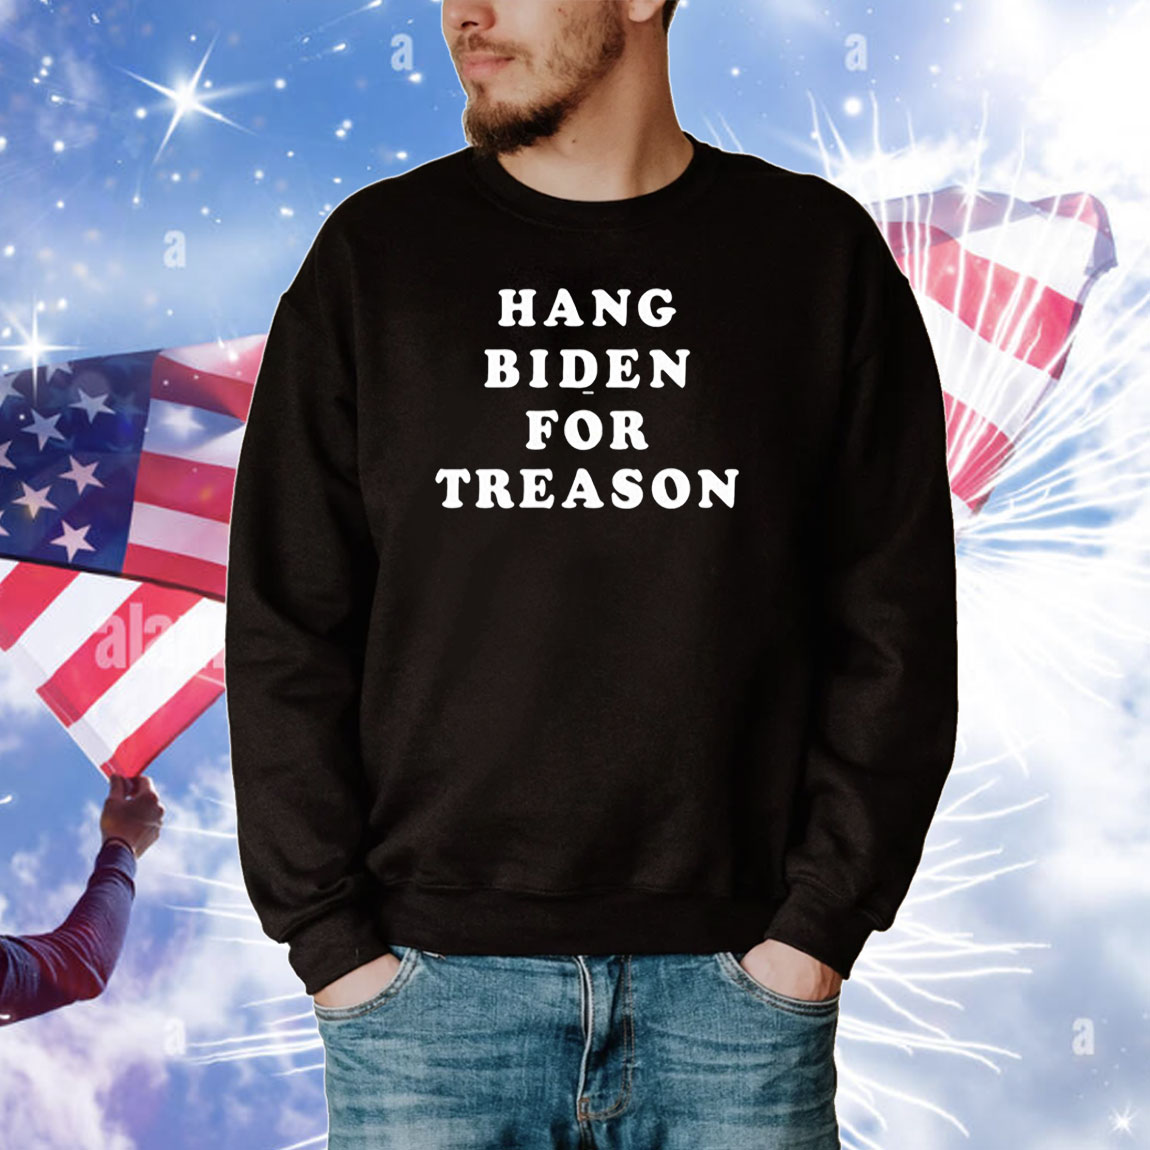 Hang Biden For Treason Tee Shirts